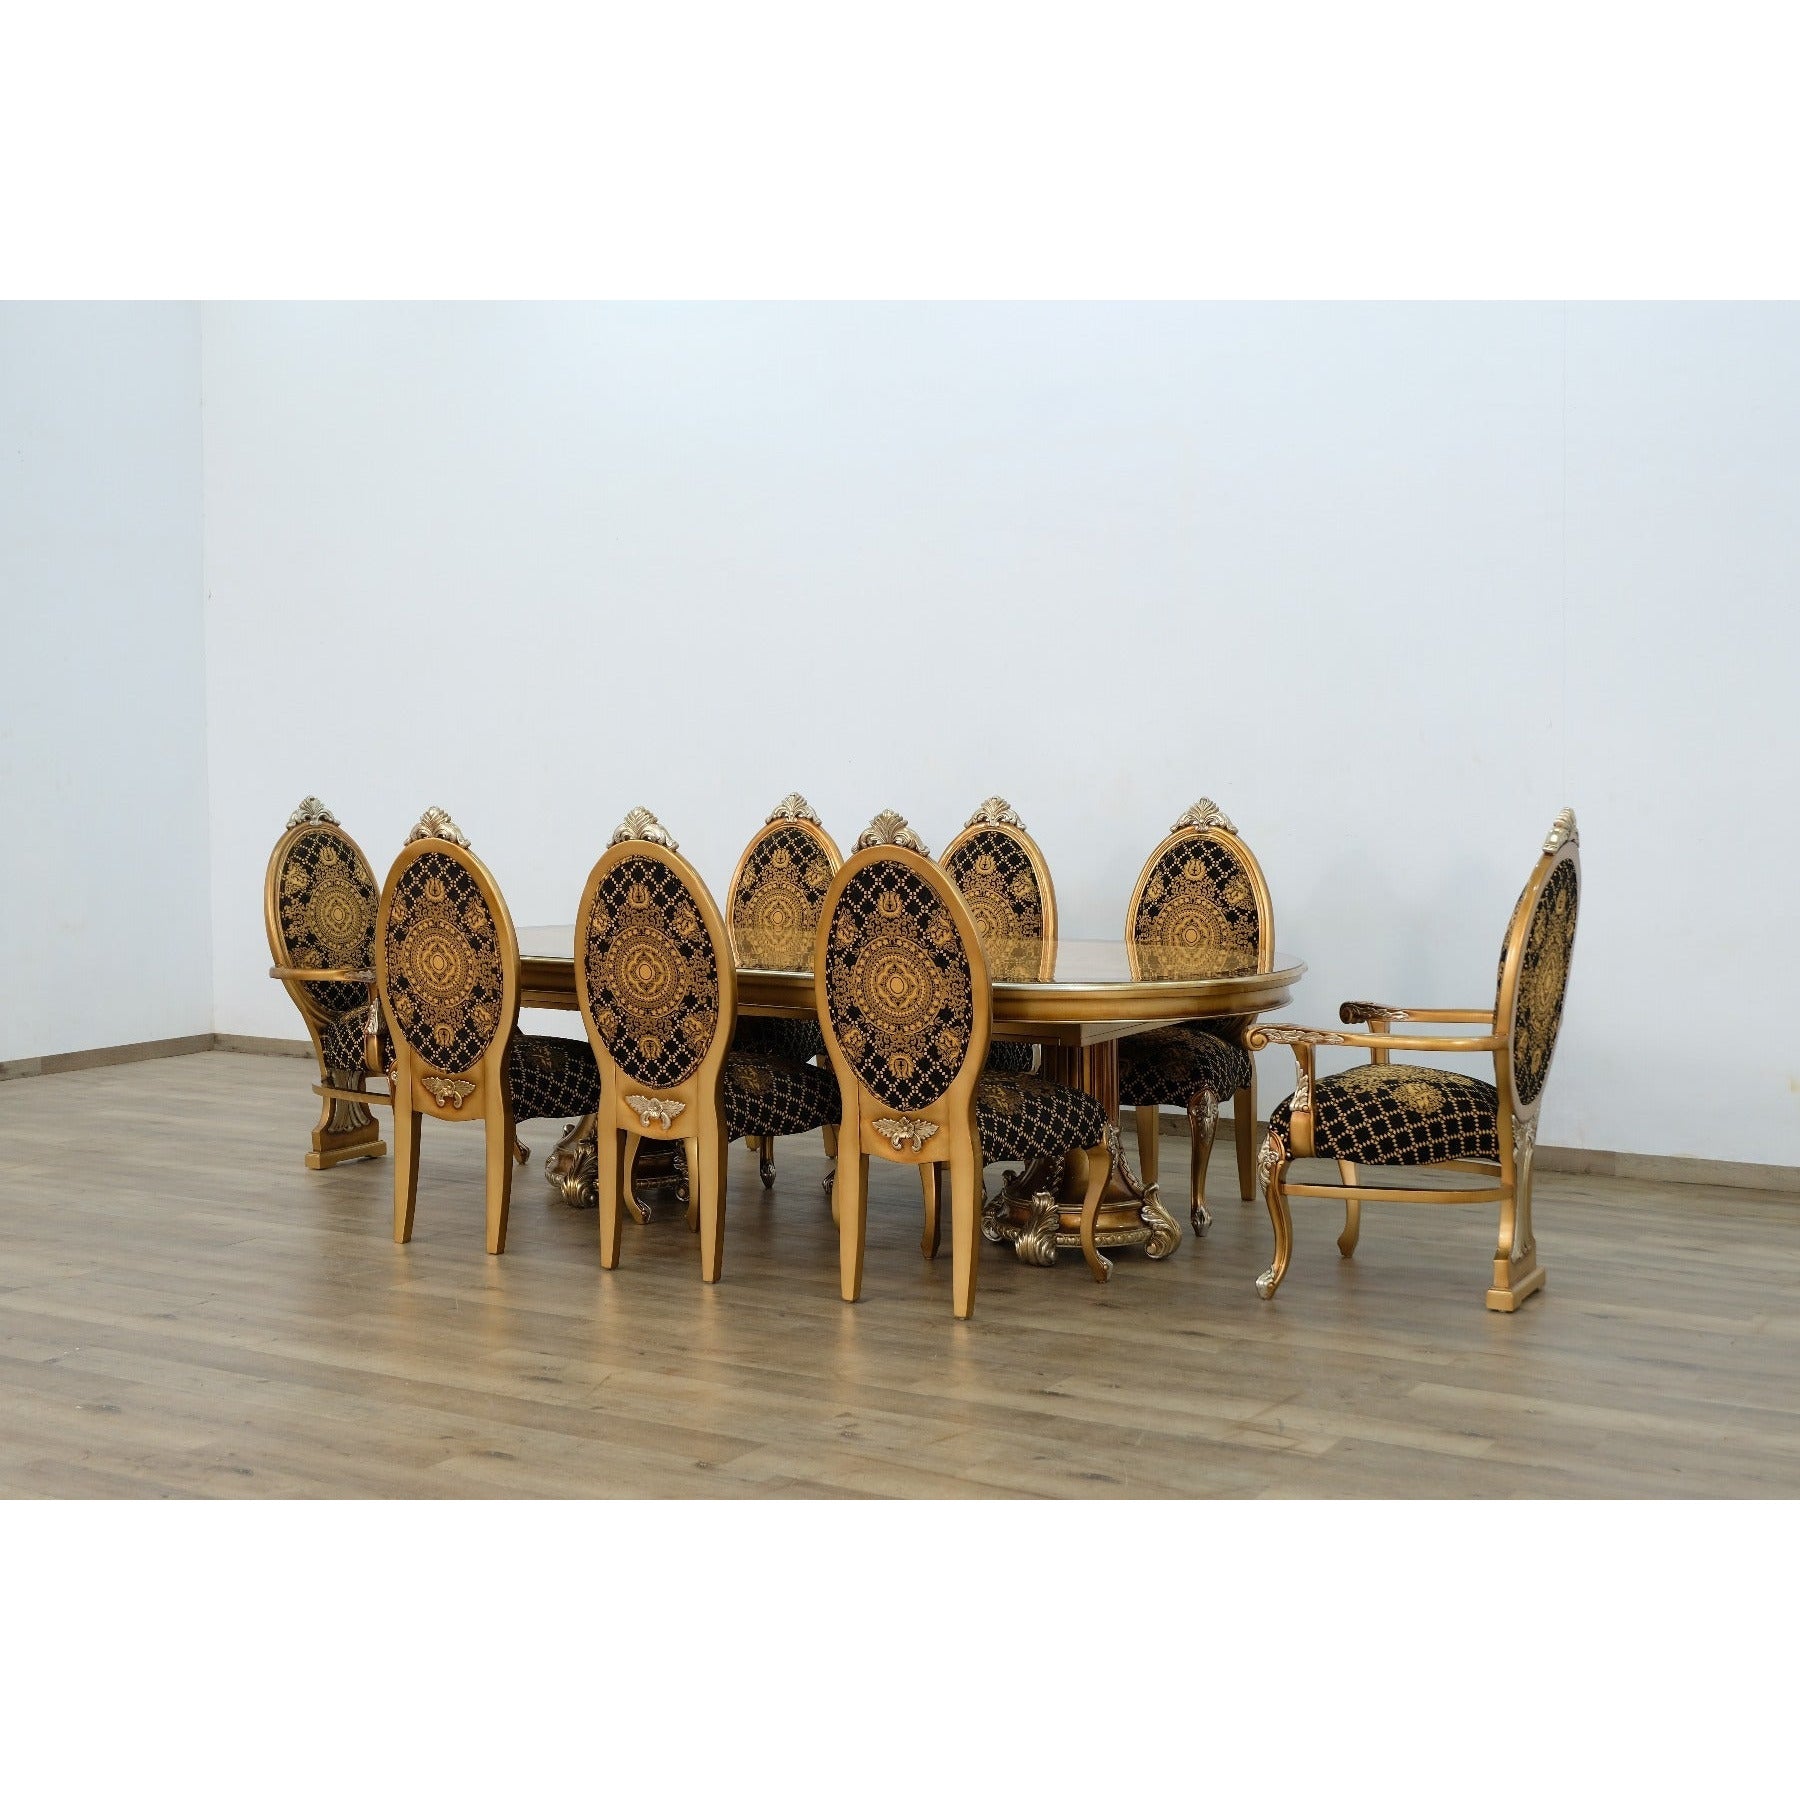 European Furniture - Emperador 7 Piece Dining Room Set in Black and Gold - 42034-7SET - New Star Living